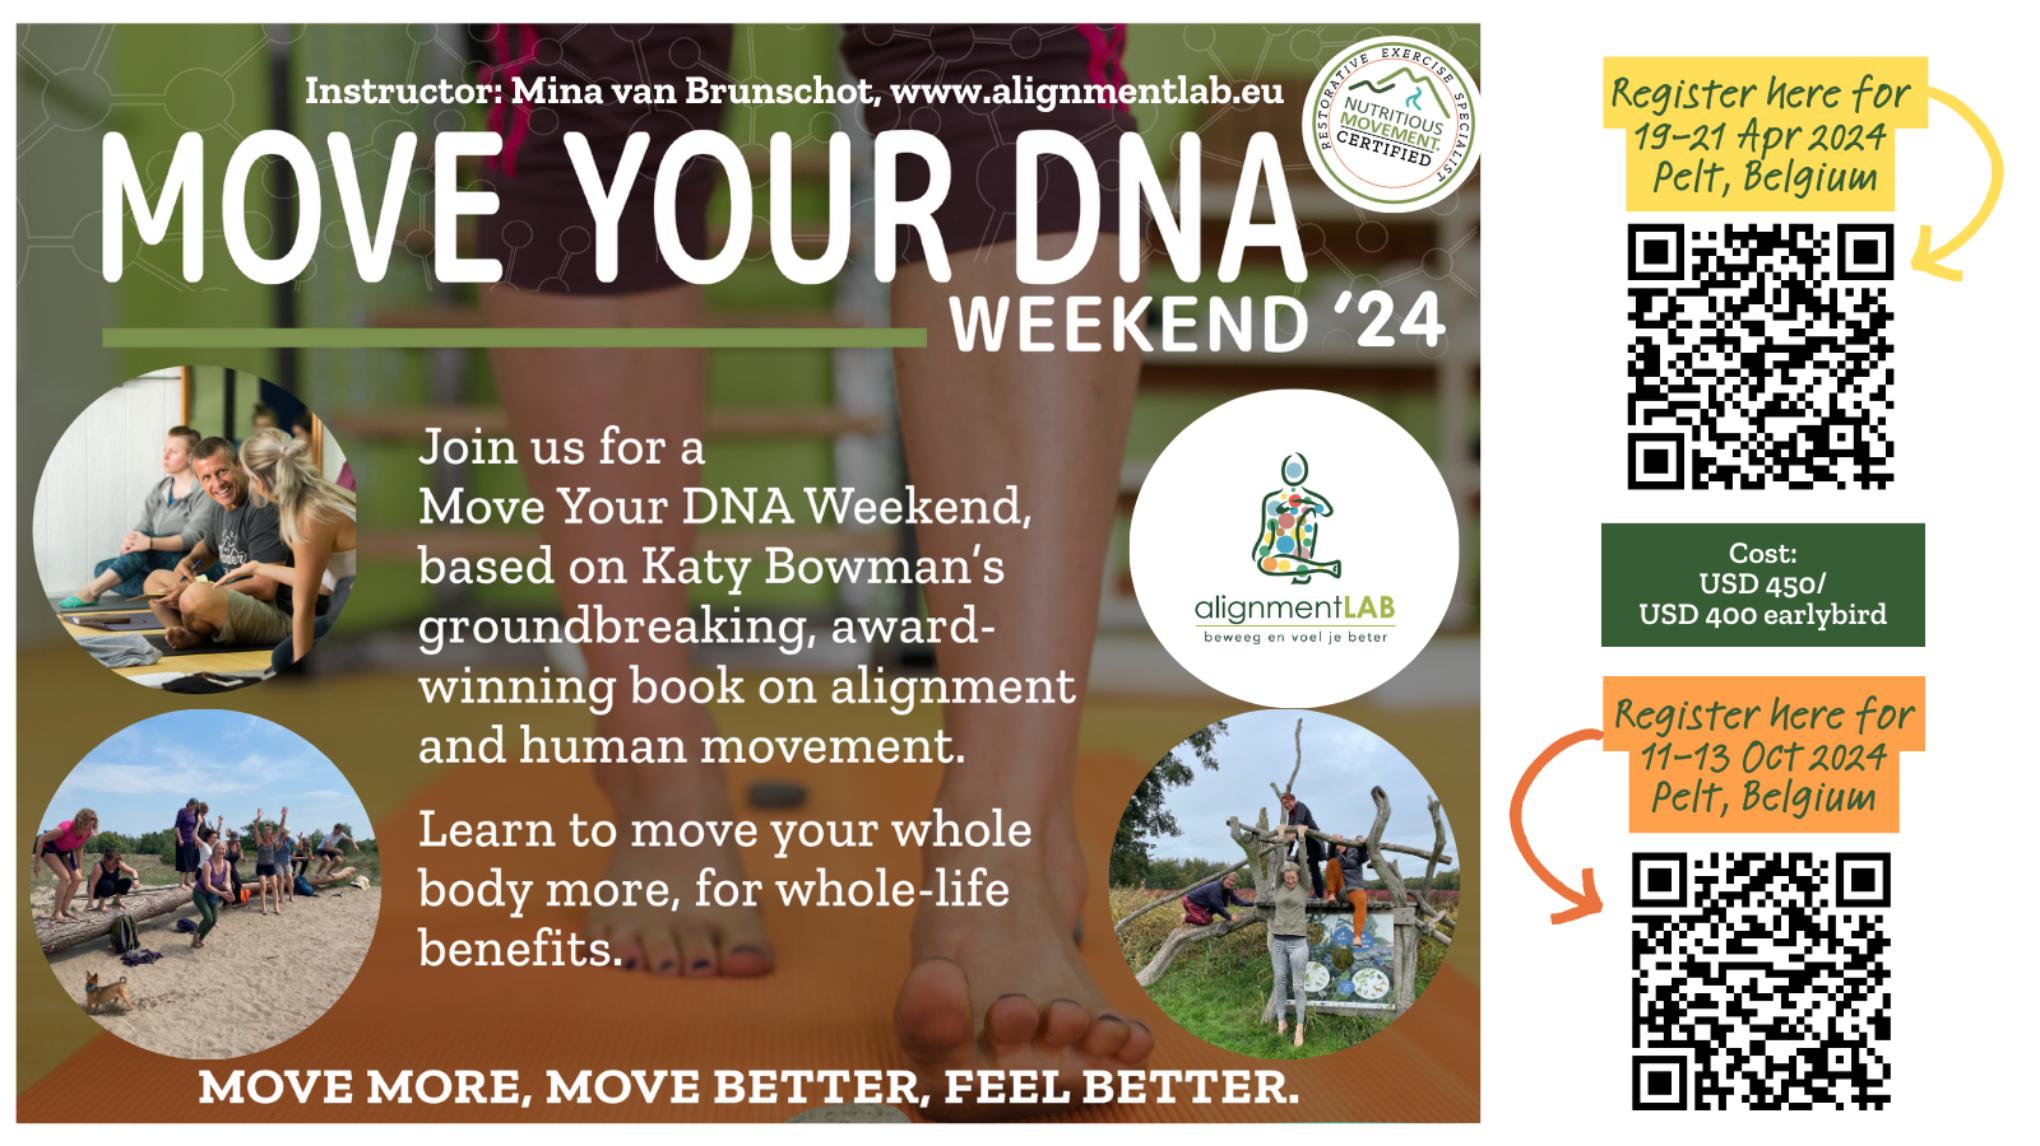 Move your DNA weekend in Pelt